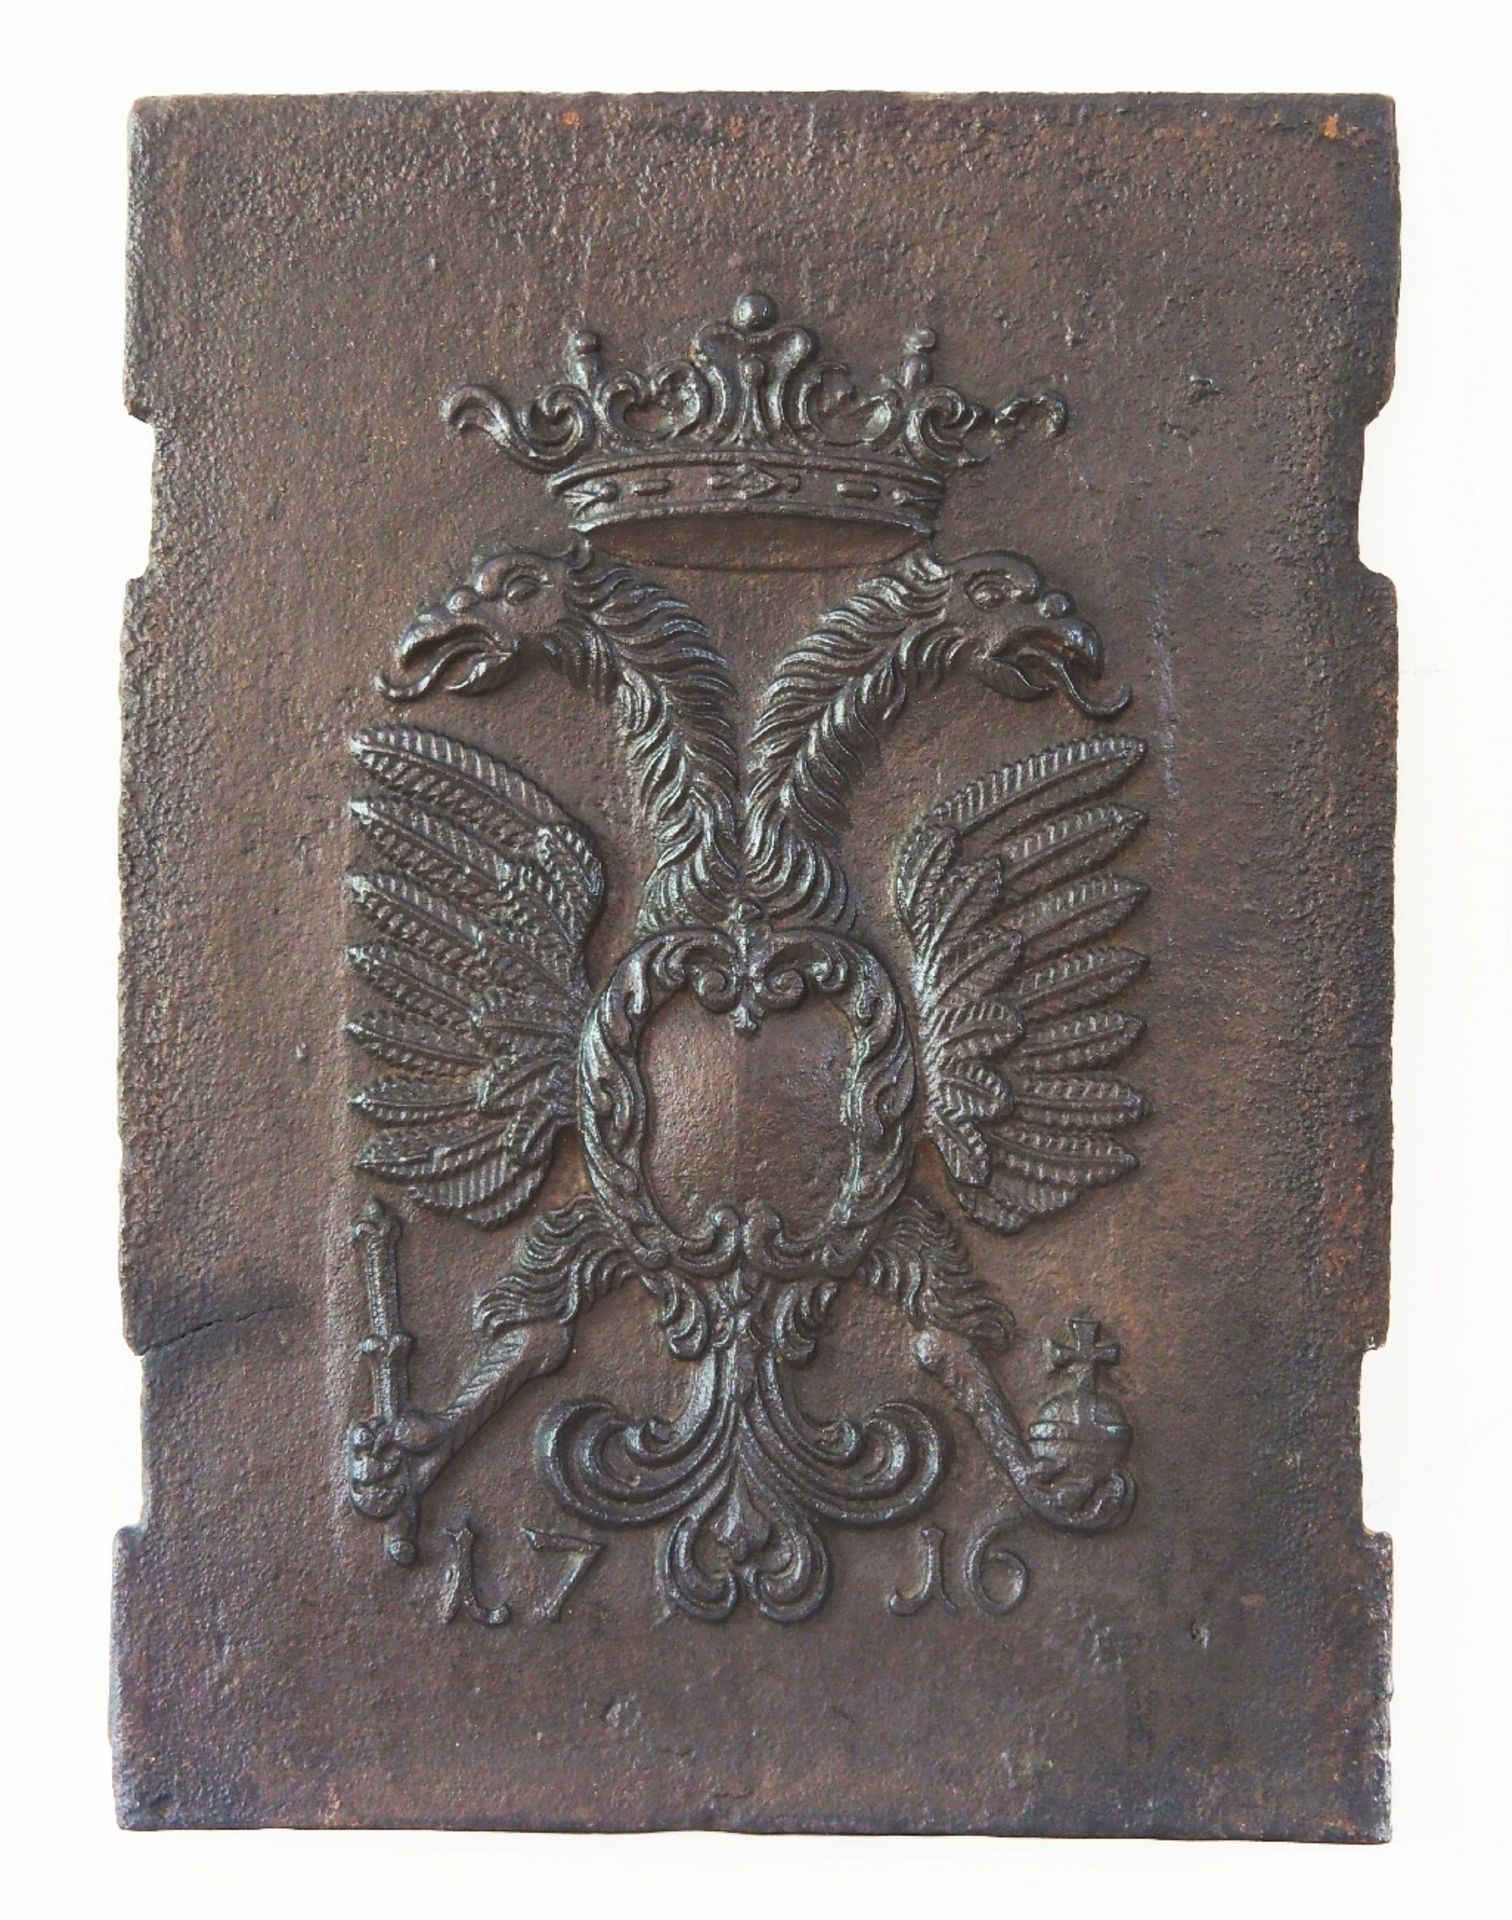 Gusseiserne Kaminplatte, wohl Anfang 19. Jahrhundert. 